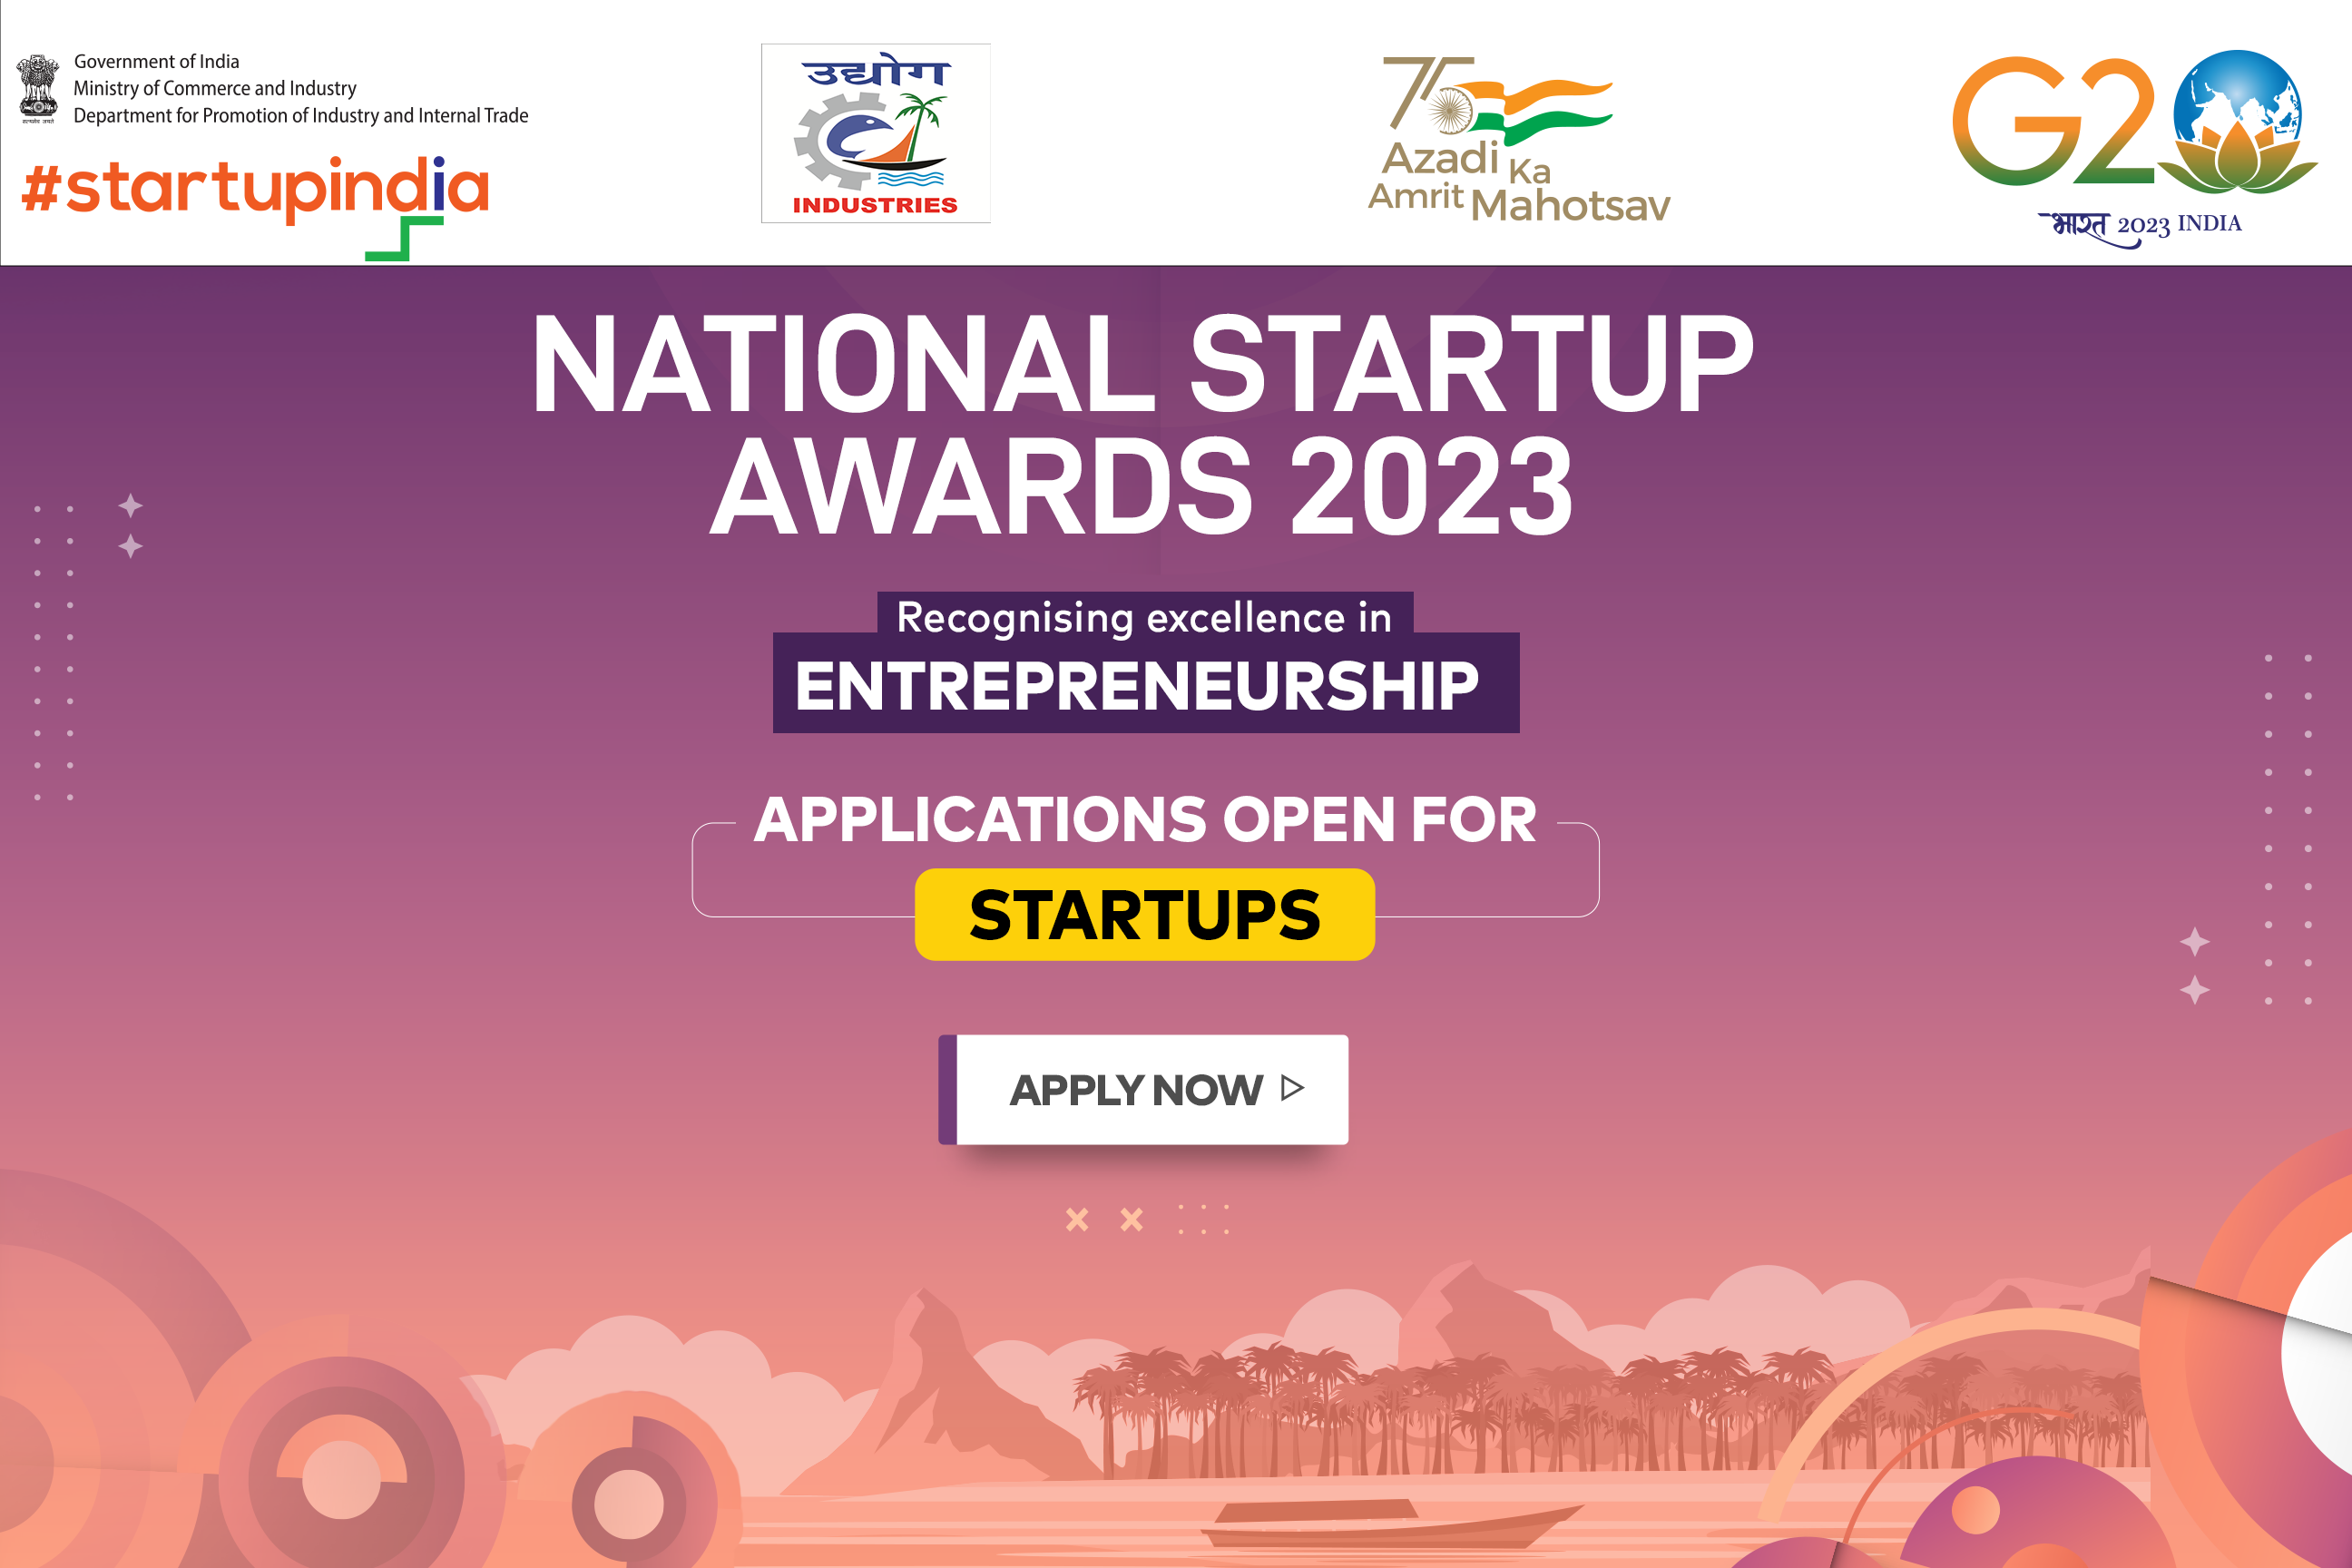 National Startup Awards 2022